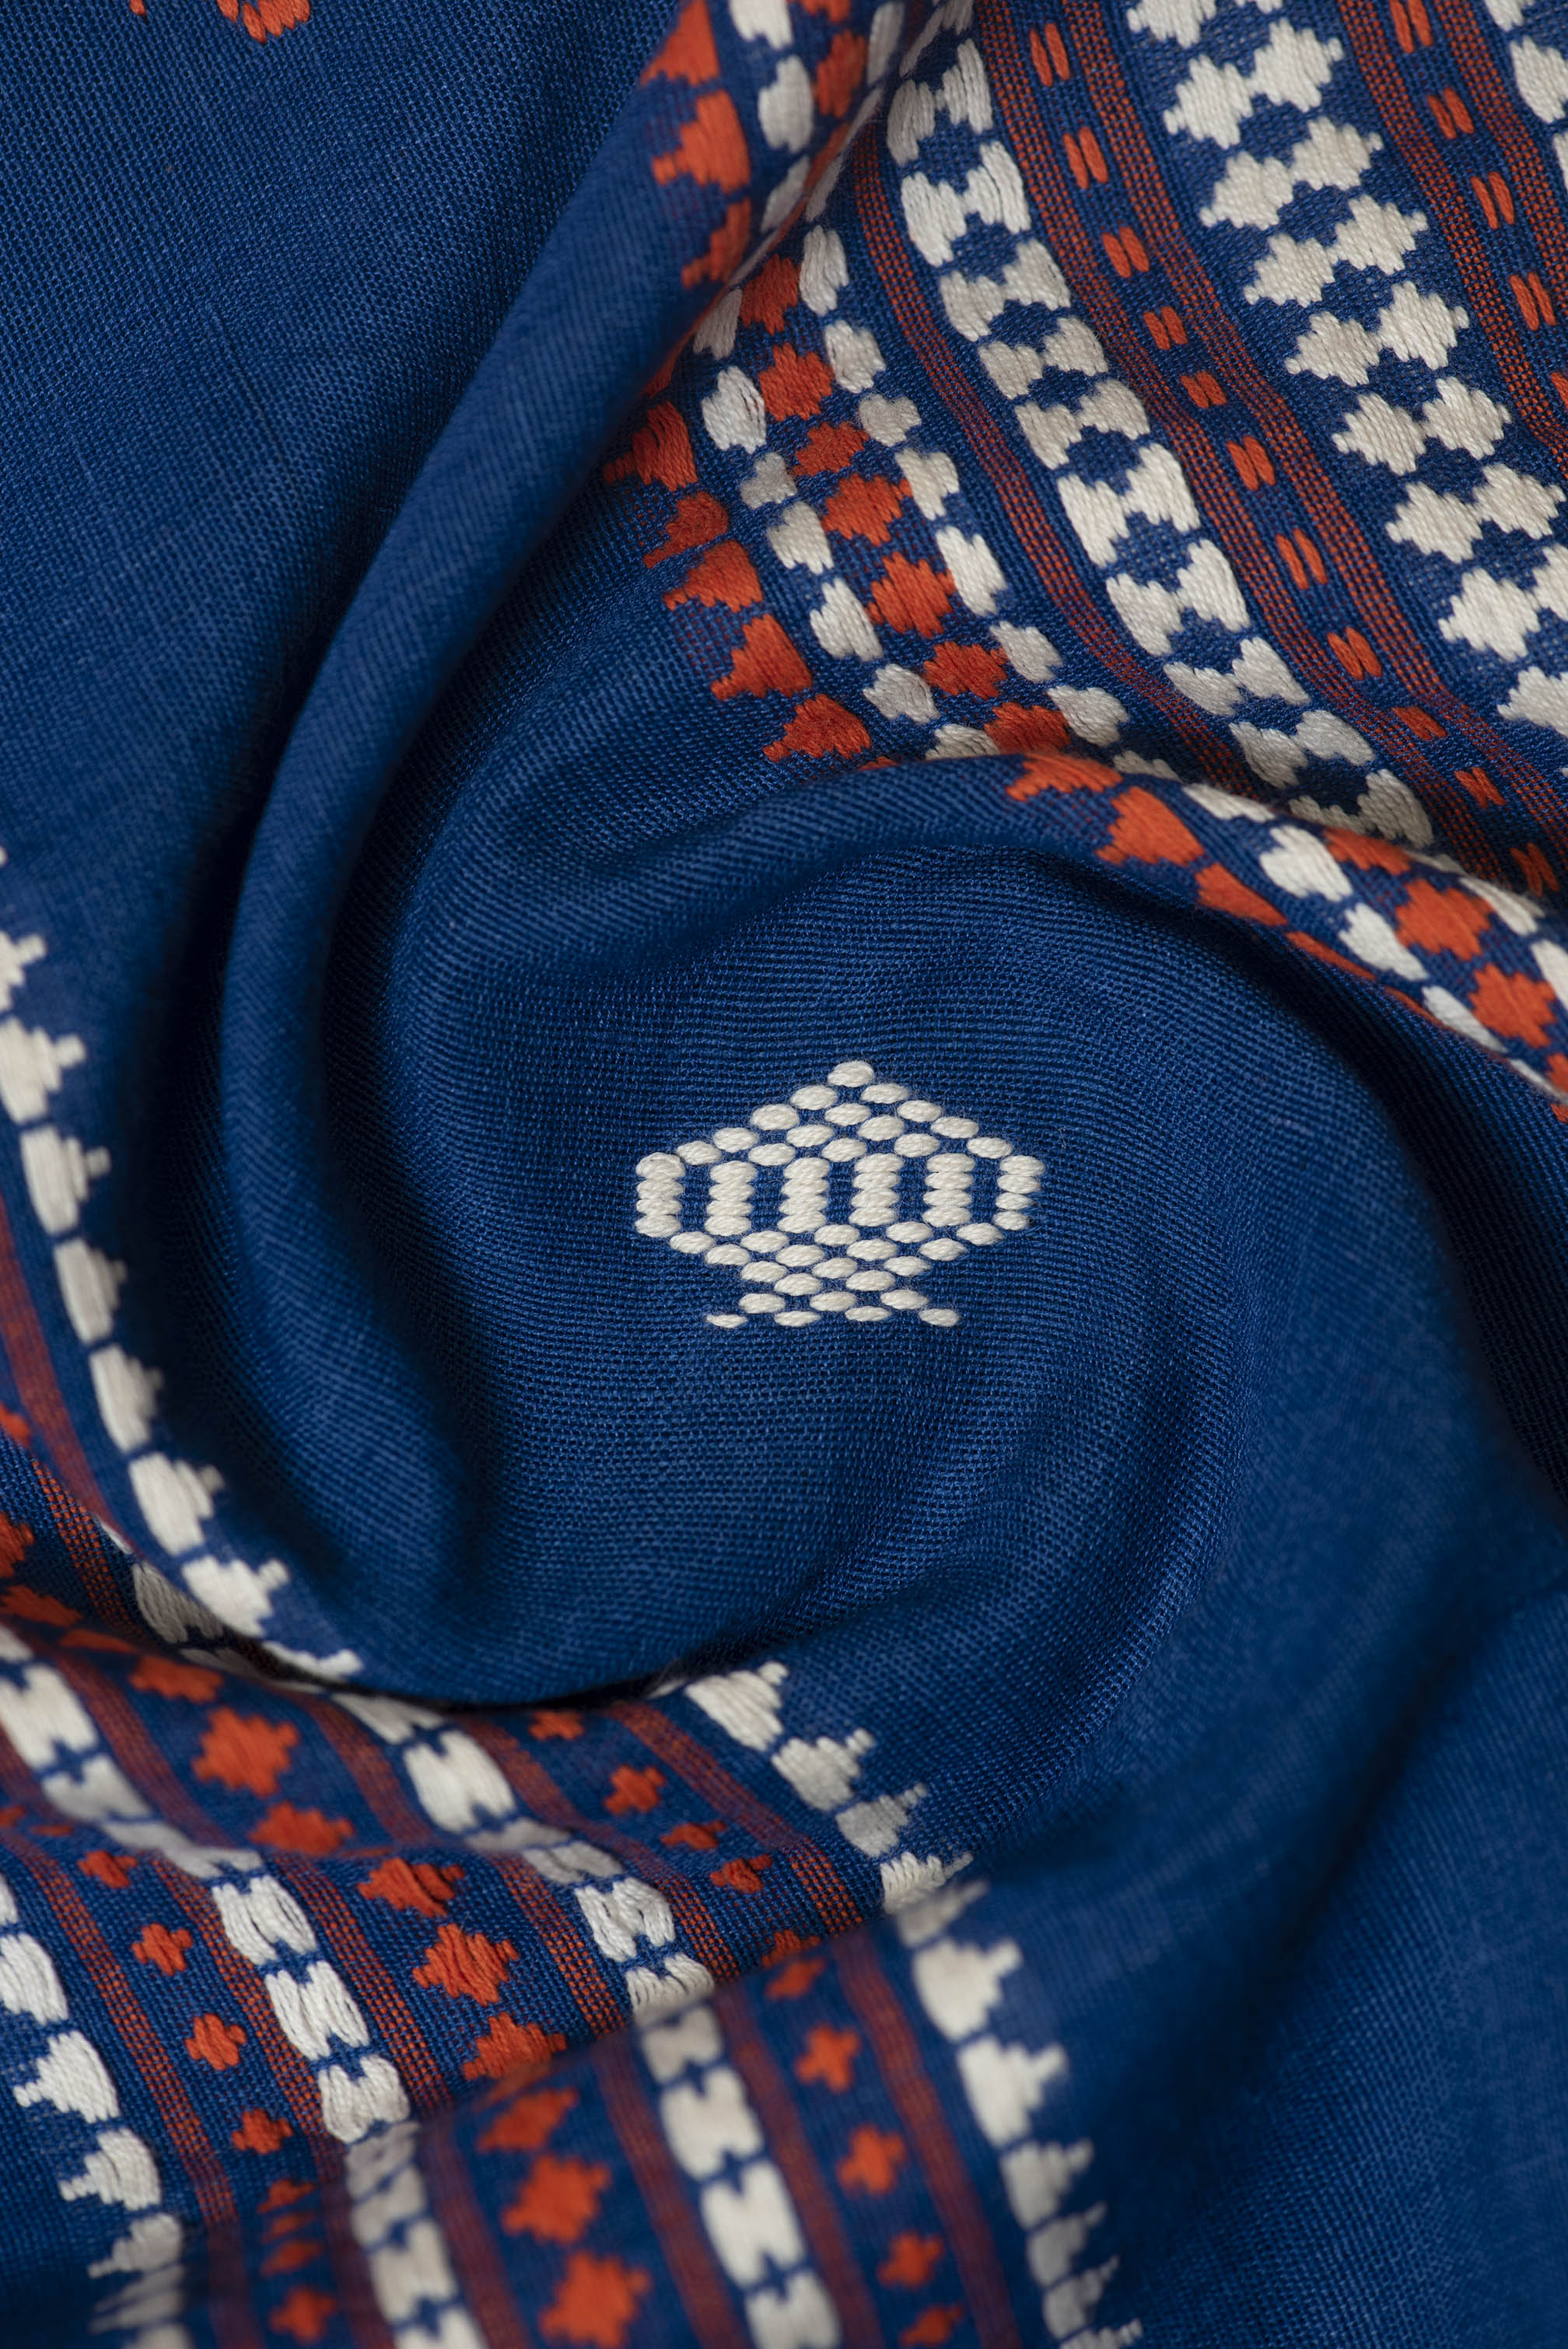 Kotpad handloom cotton saree | natural dyed | indigo